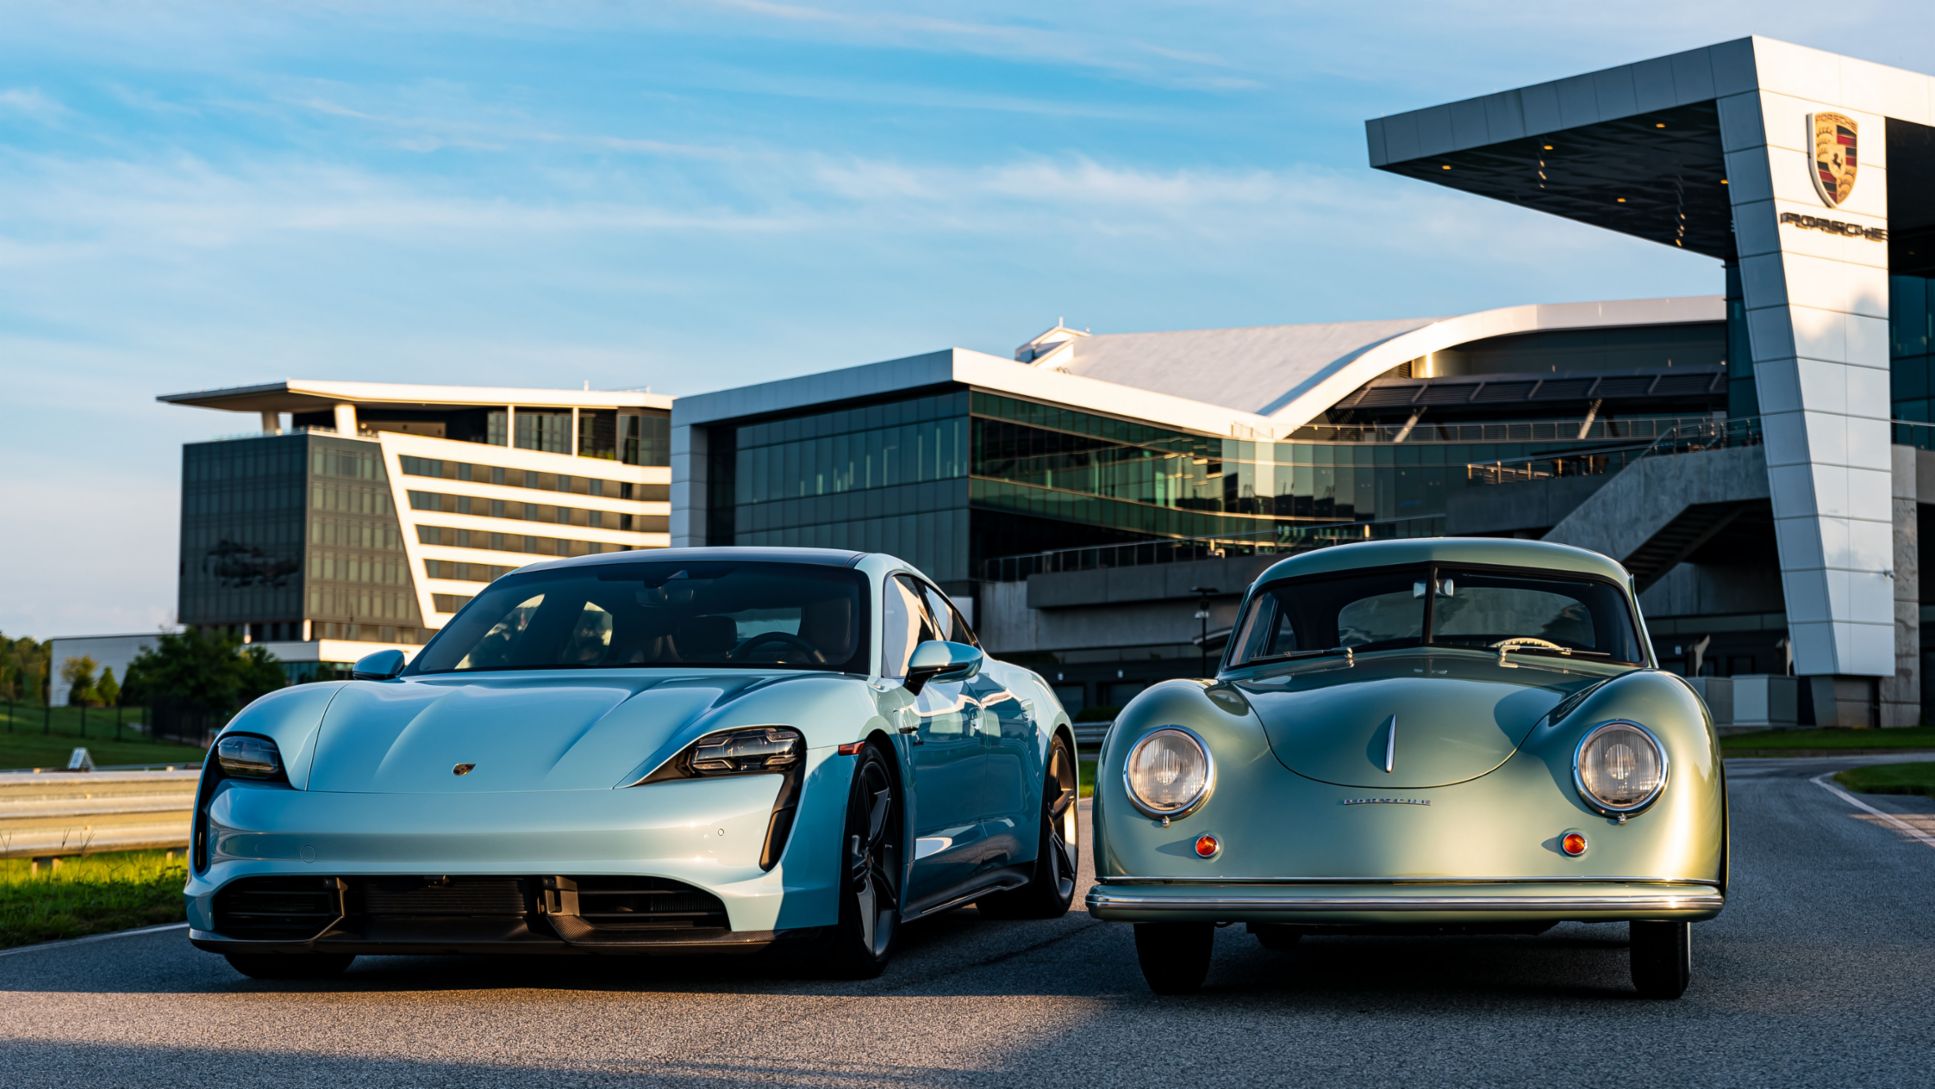 2020 Taycan Turbo S, 1950 356, Porsche Experience Center Atlanta, 2020, Porsche Cars North America, Inc.